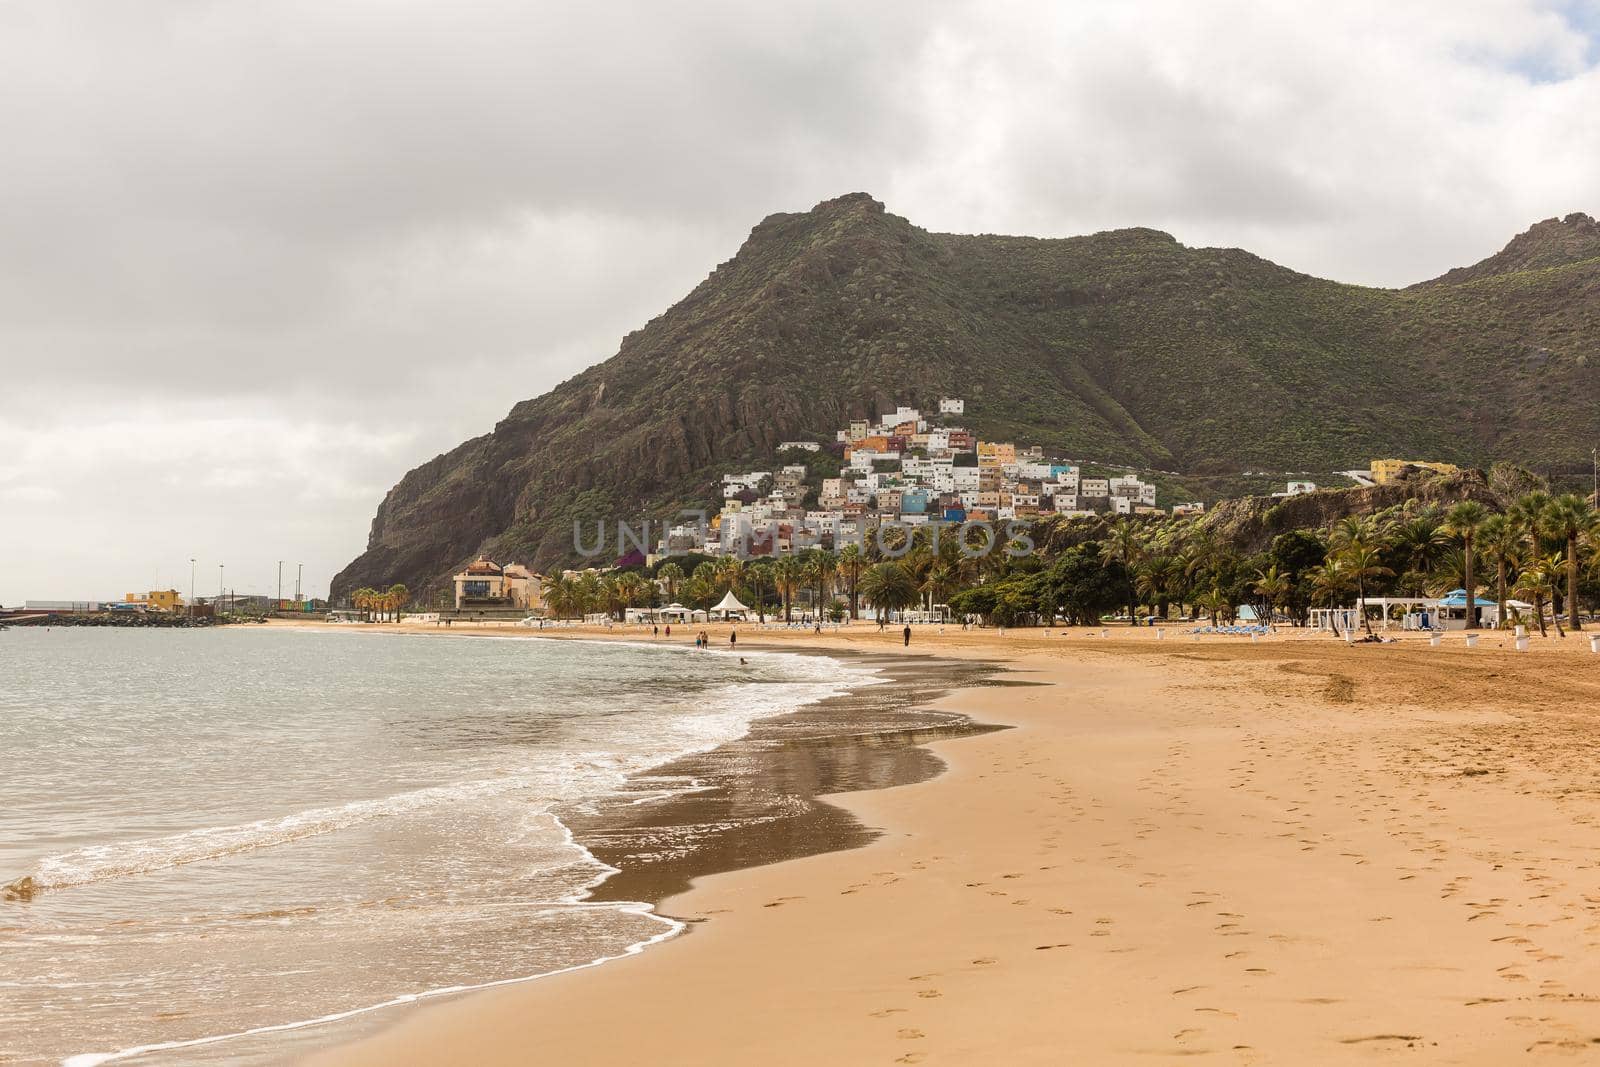 view on Teresitas beach near Santa Cruz de Tenerife on Canary islands, Spain. by Andelov13